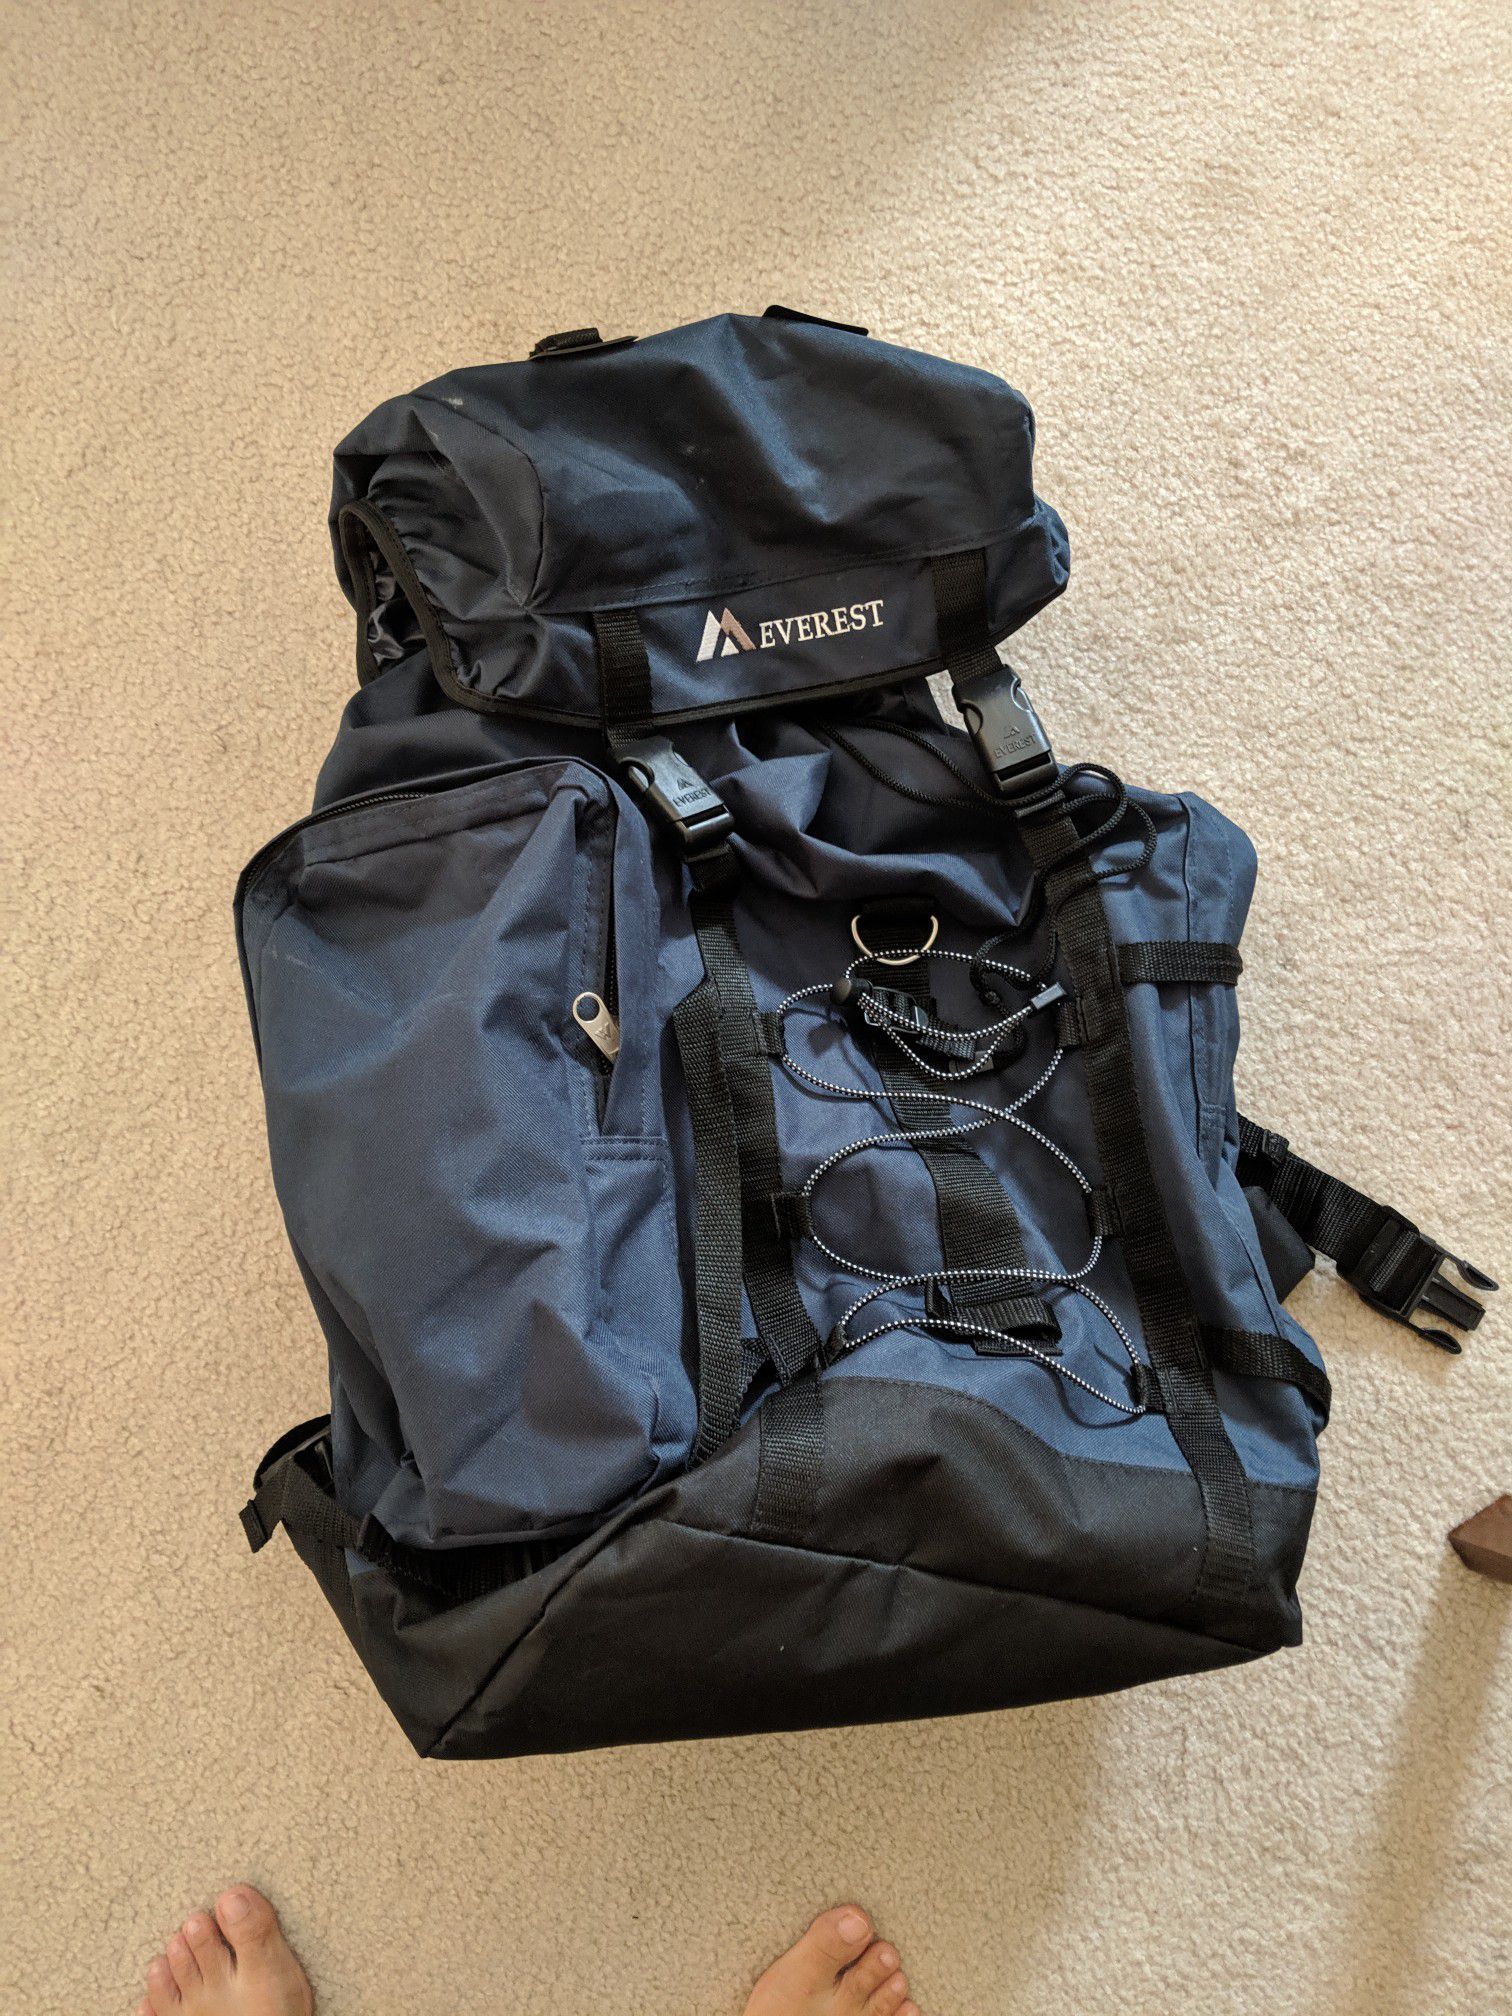 Everest Hiking Pack, Navy